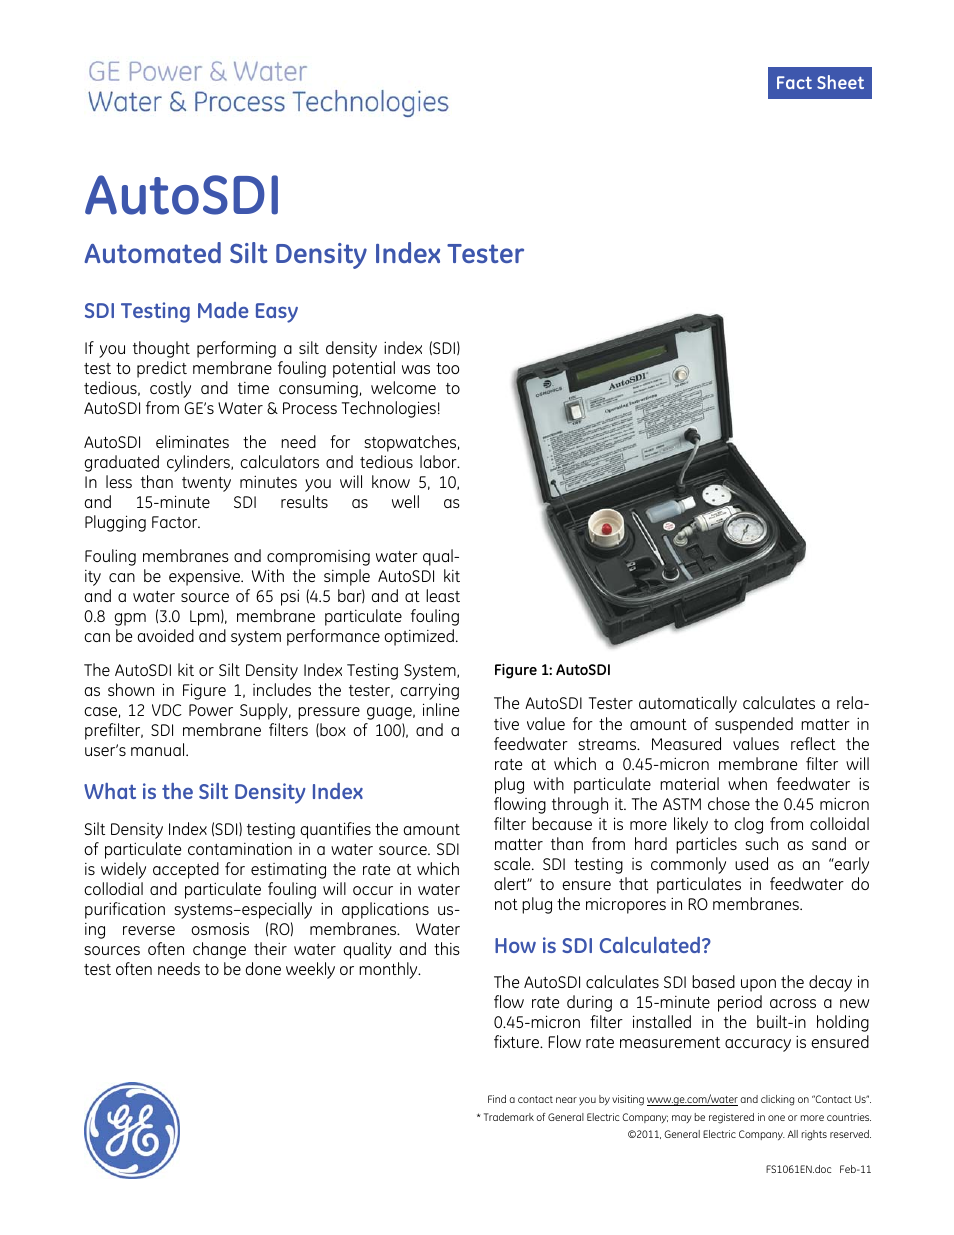 AutoSDI - Automated Silt Density Index Tester